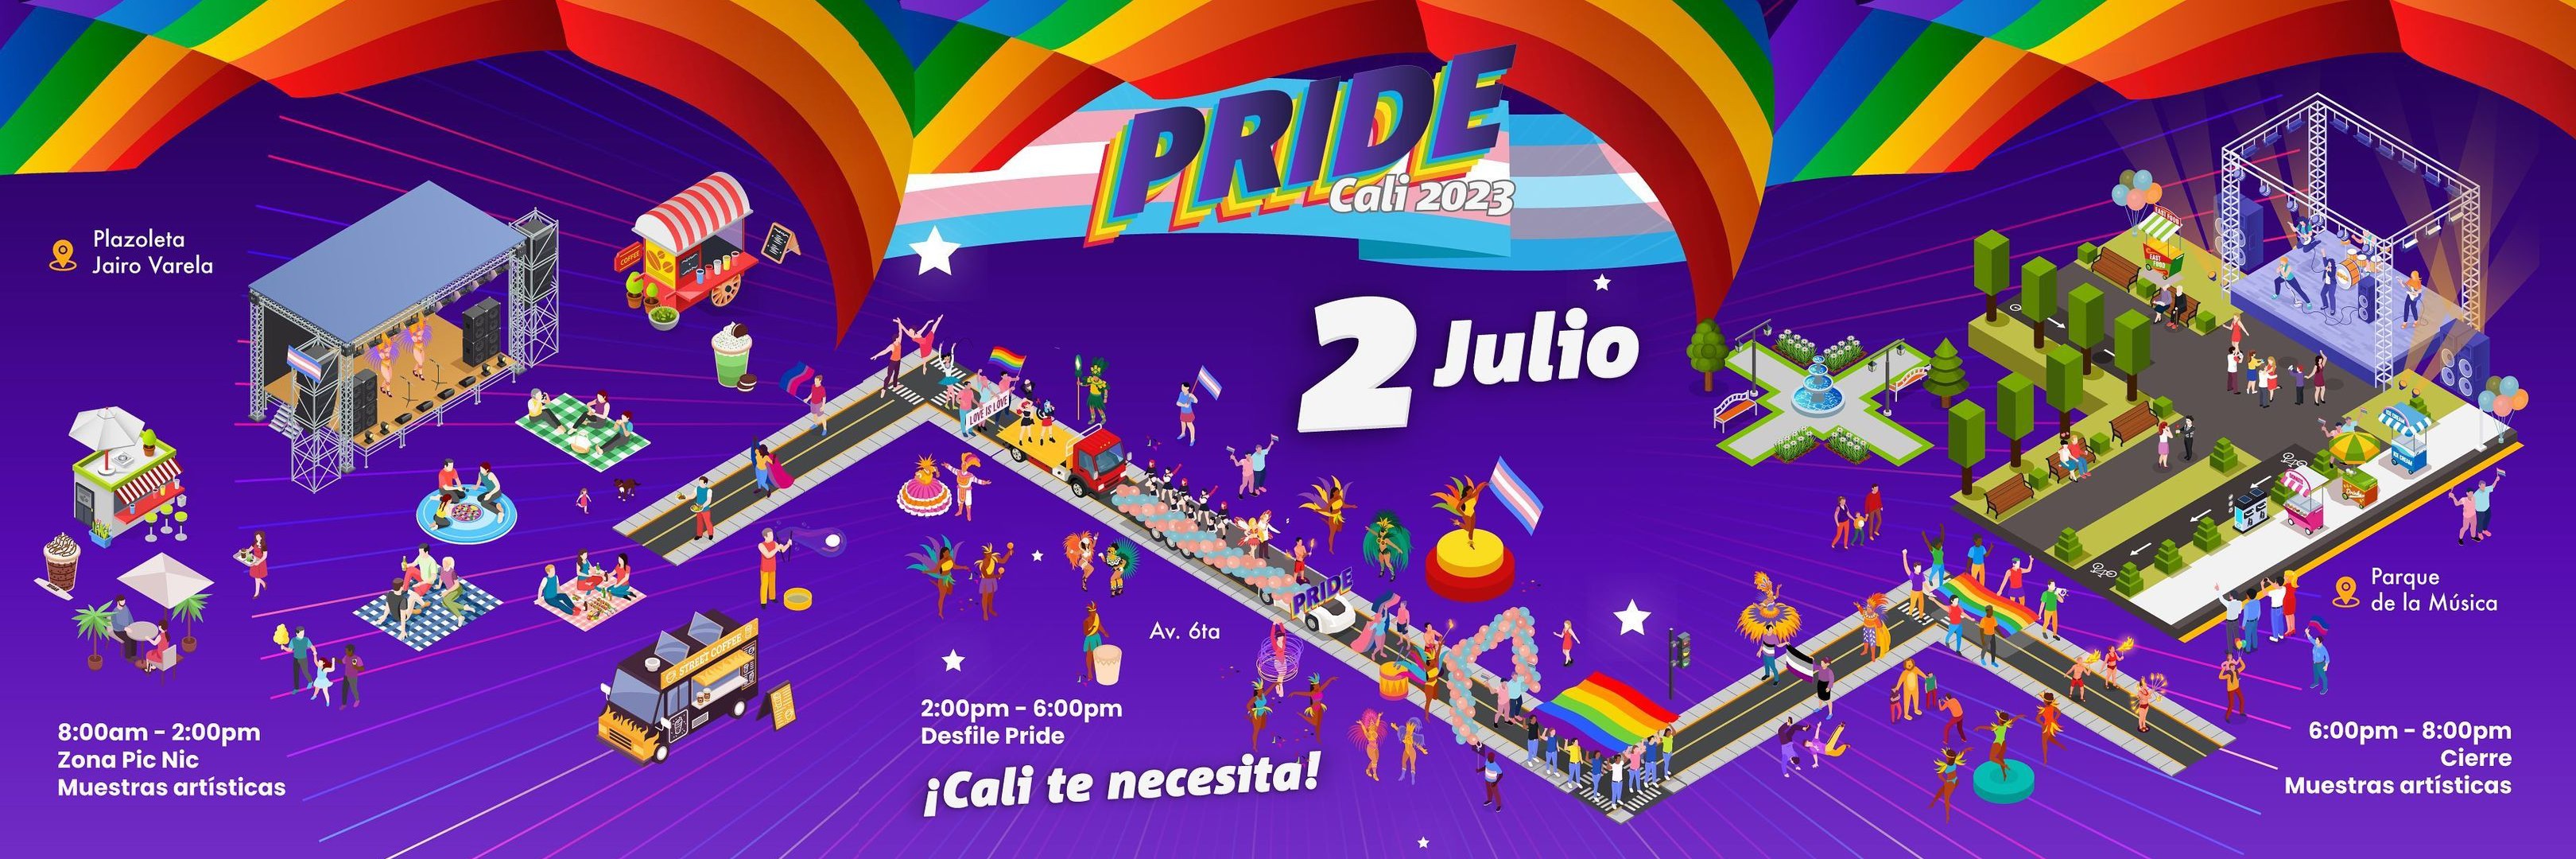 Pride Cali 2023